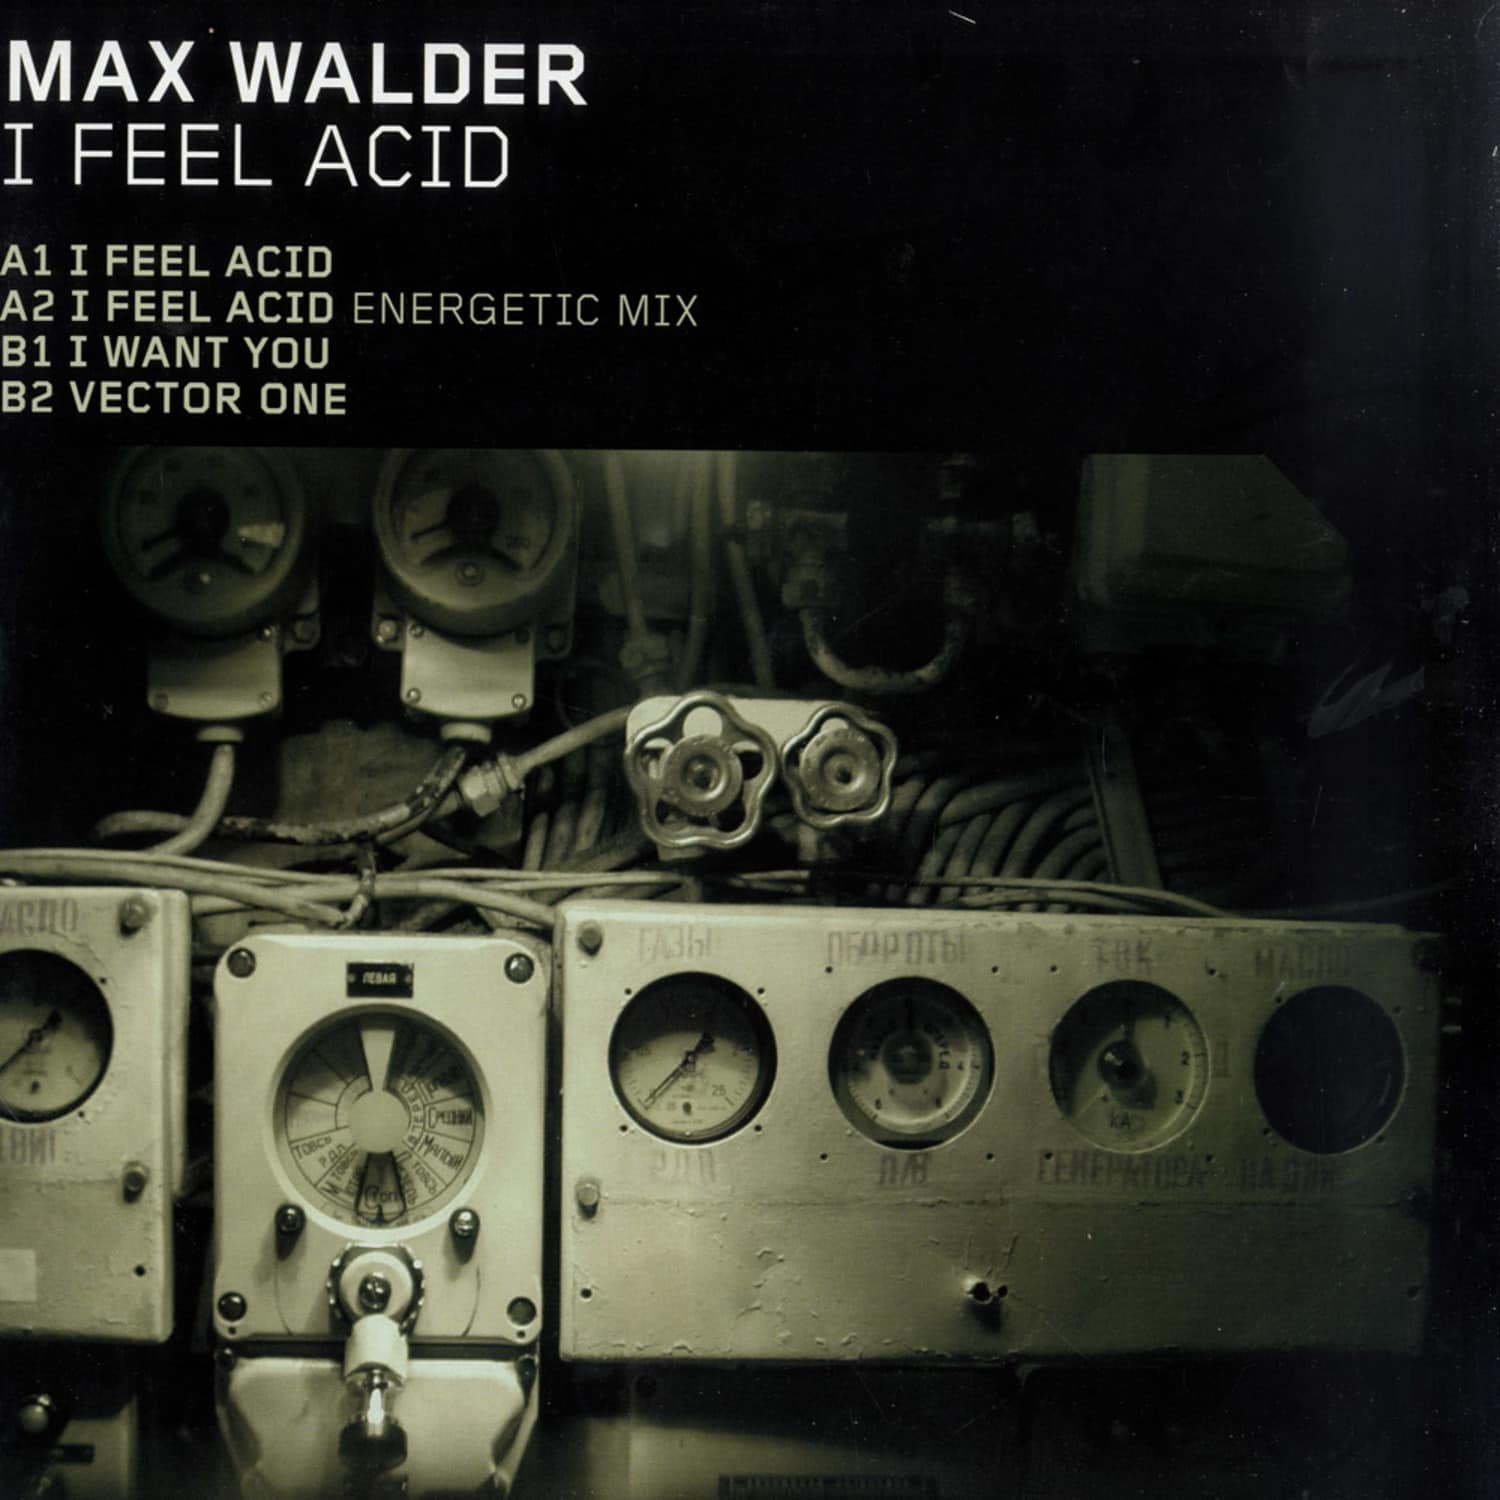 Max Walder - I FEEL ACID